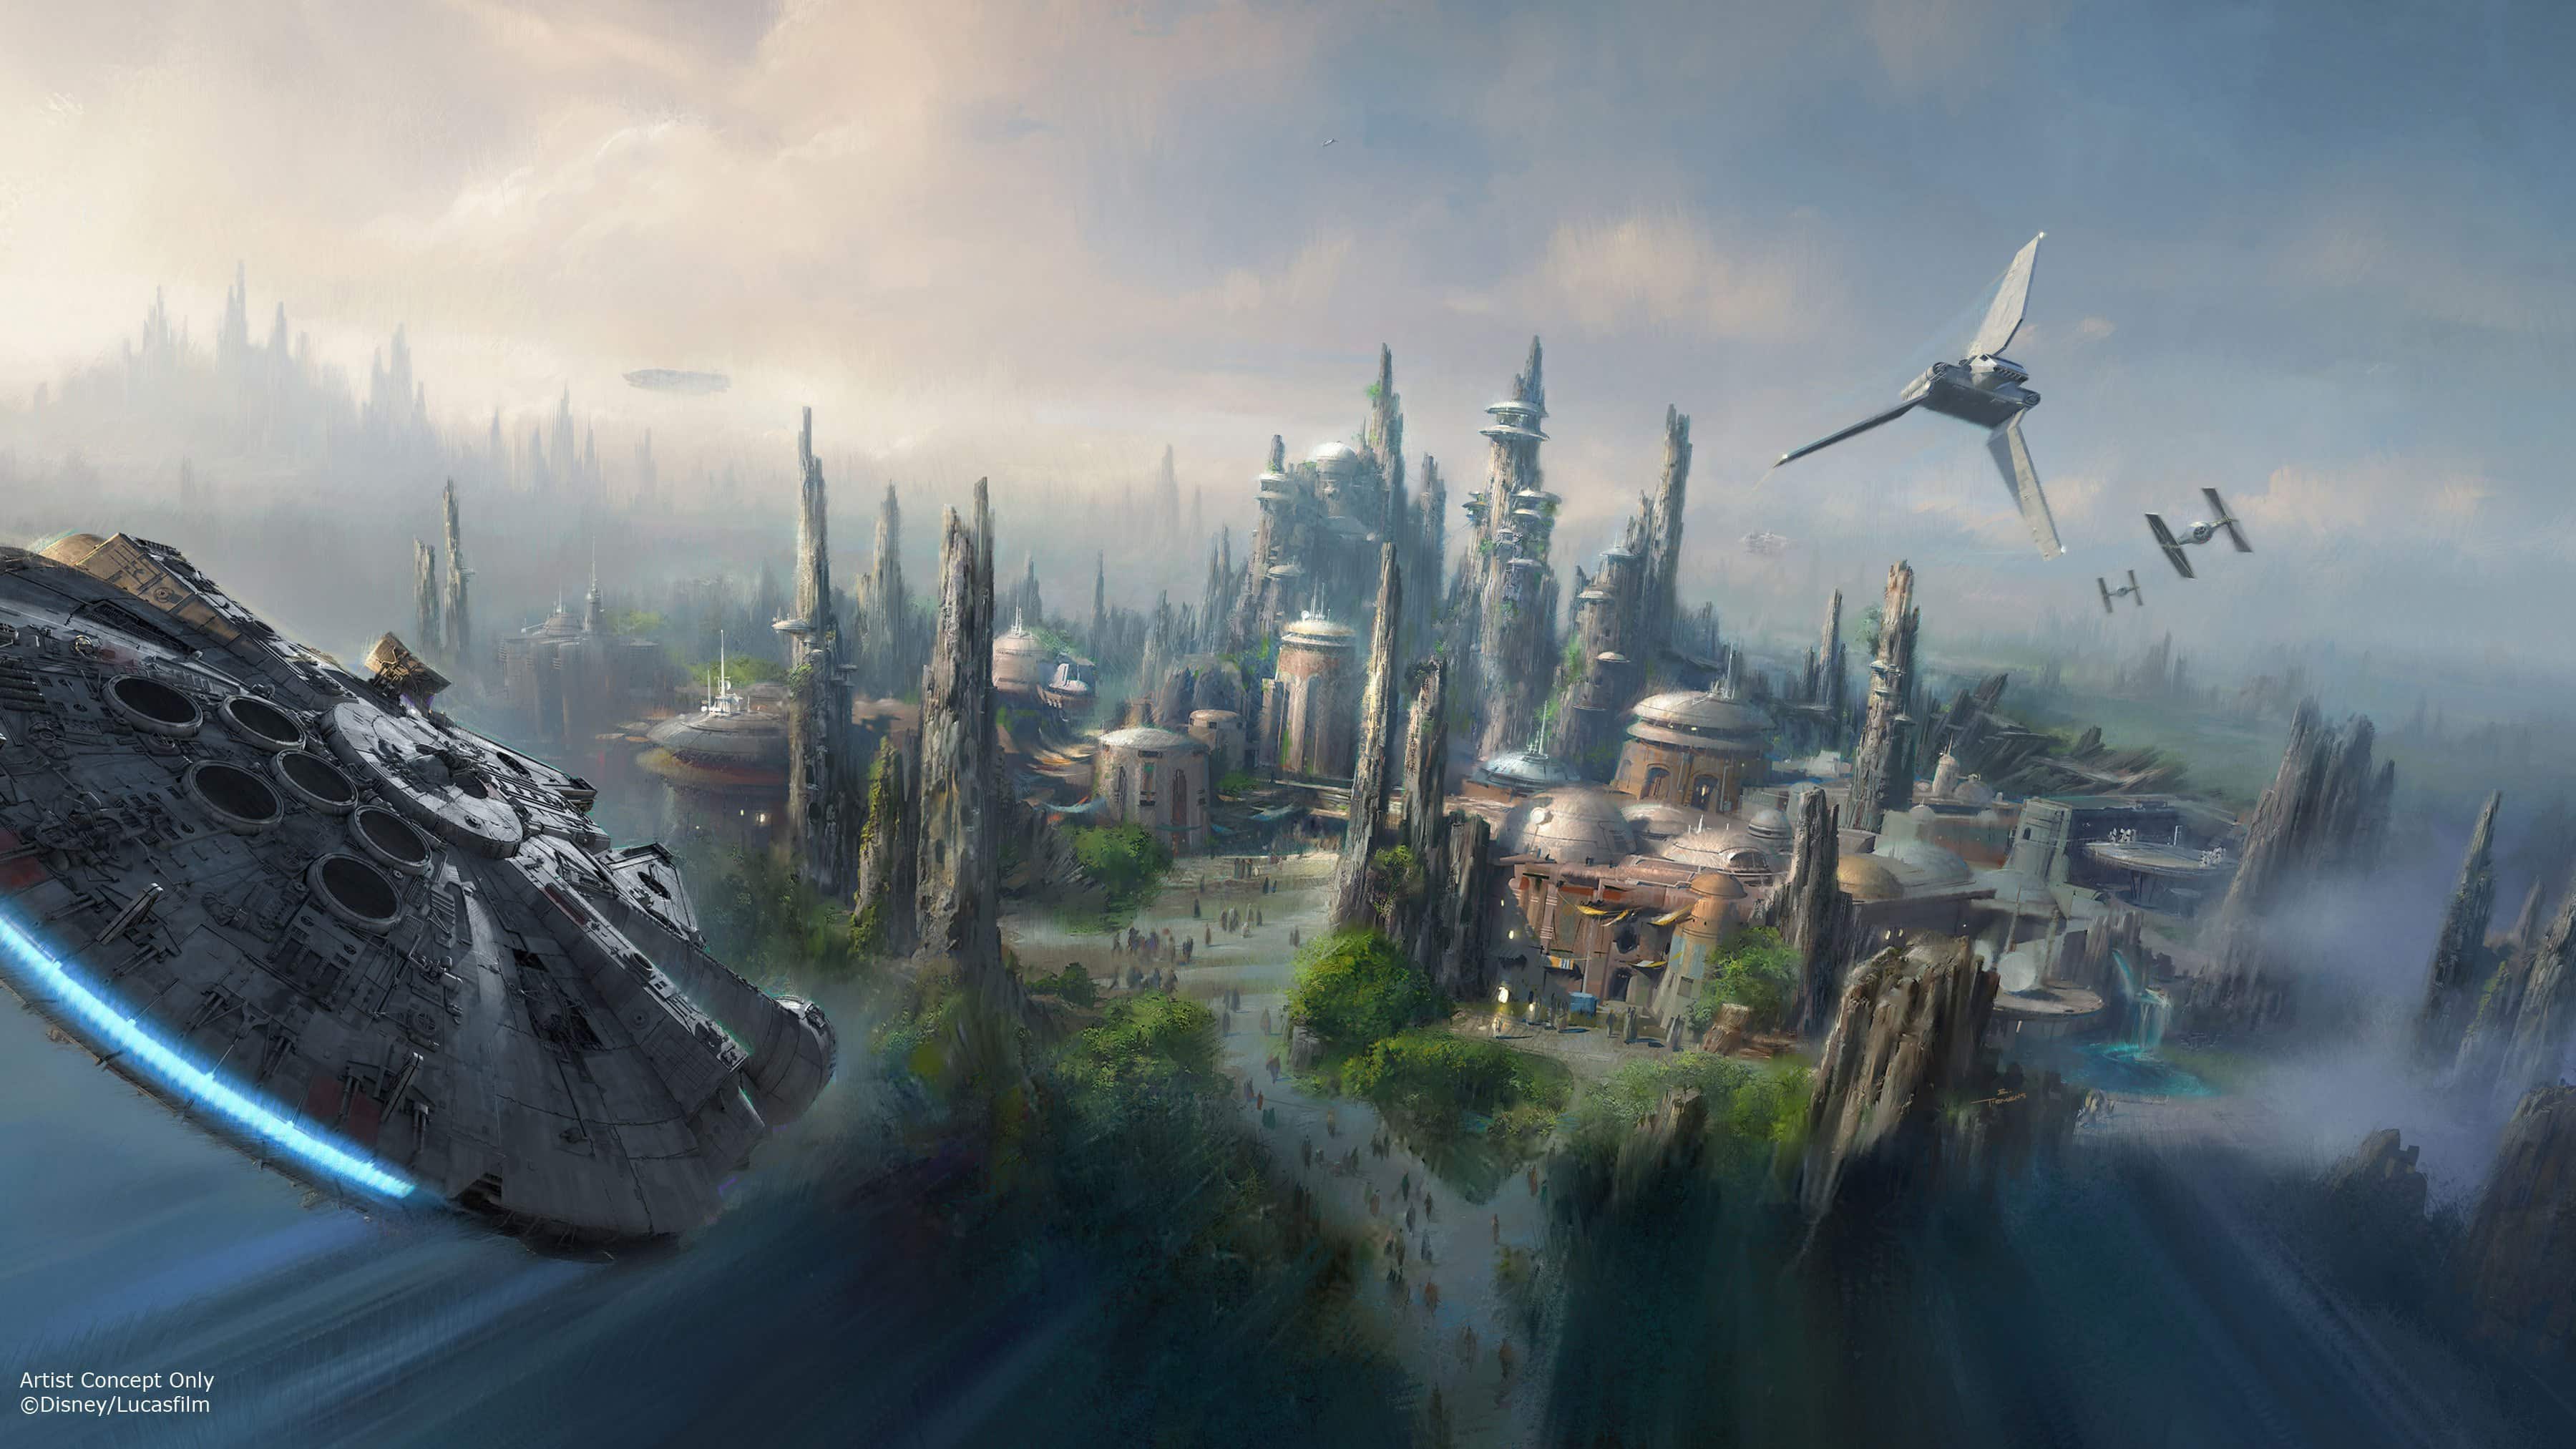 Star Wars: Galaxy's Edge at Disney World's Hollywood Studios